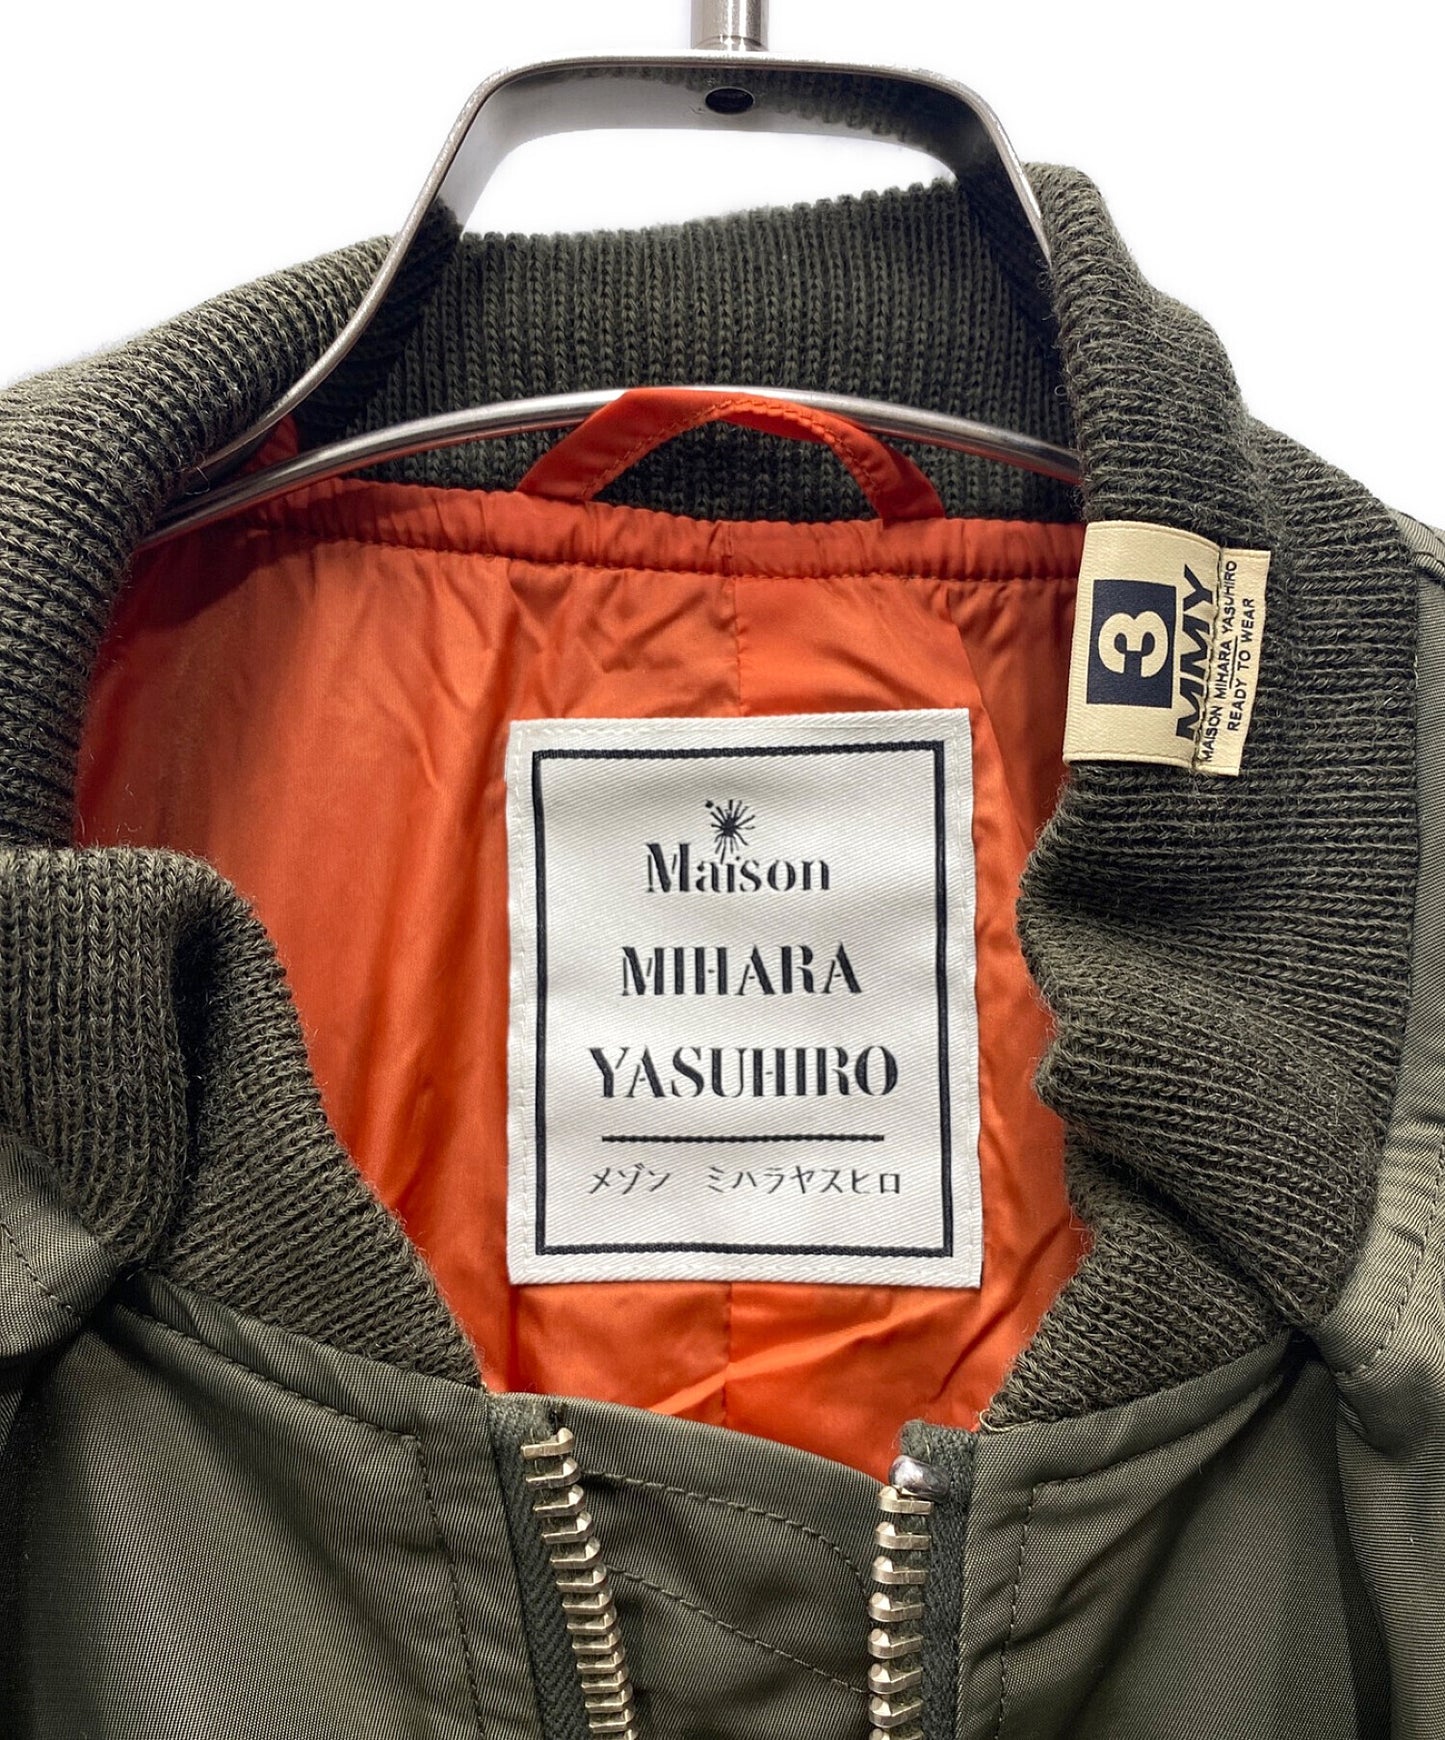 Maison Mihara Yasuhiro หน้าแขน MA-1 B08BL281